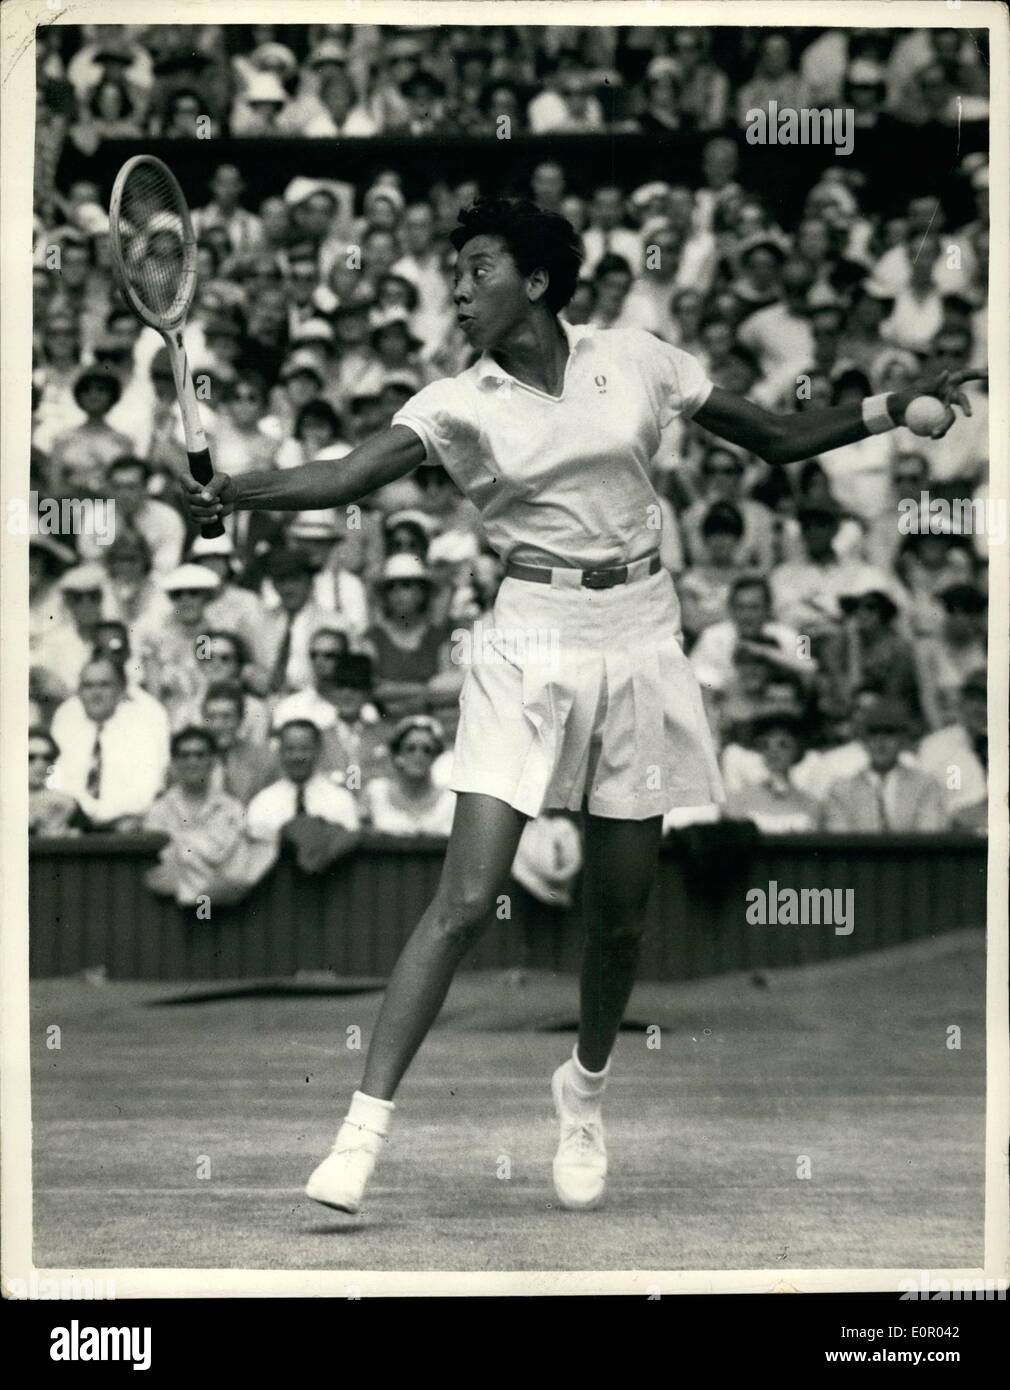 Lug. 07, 1957 - tennis a Wimbledon. Donne Singoli Semifinale. Althea Gibson batte Christine Truman. Althea Gibson USA , oggi ri Foto Stock